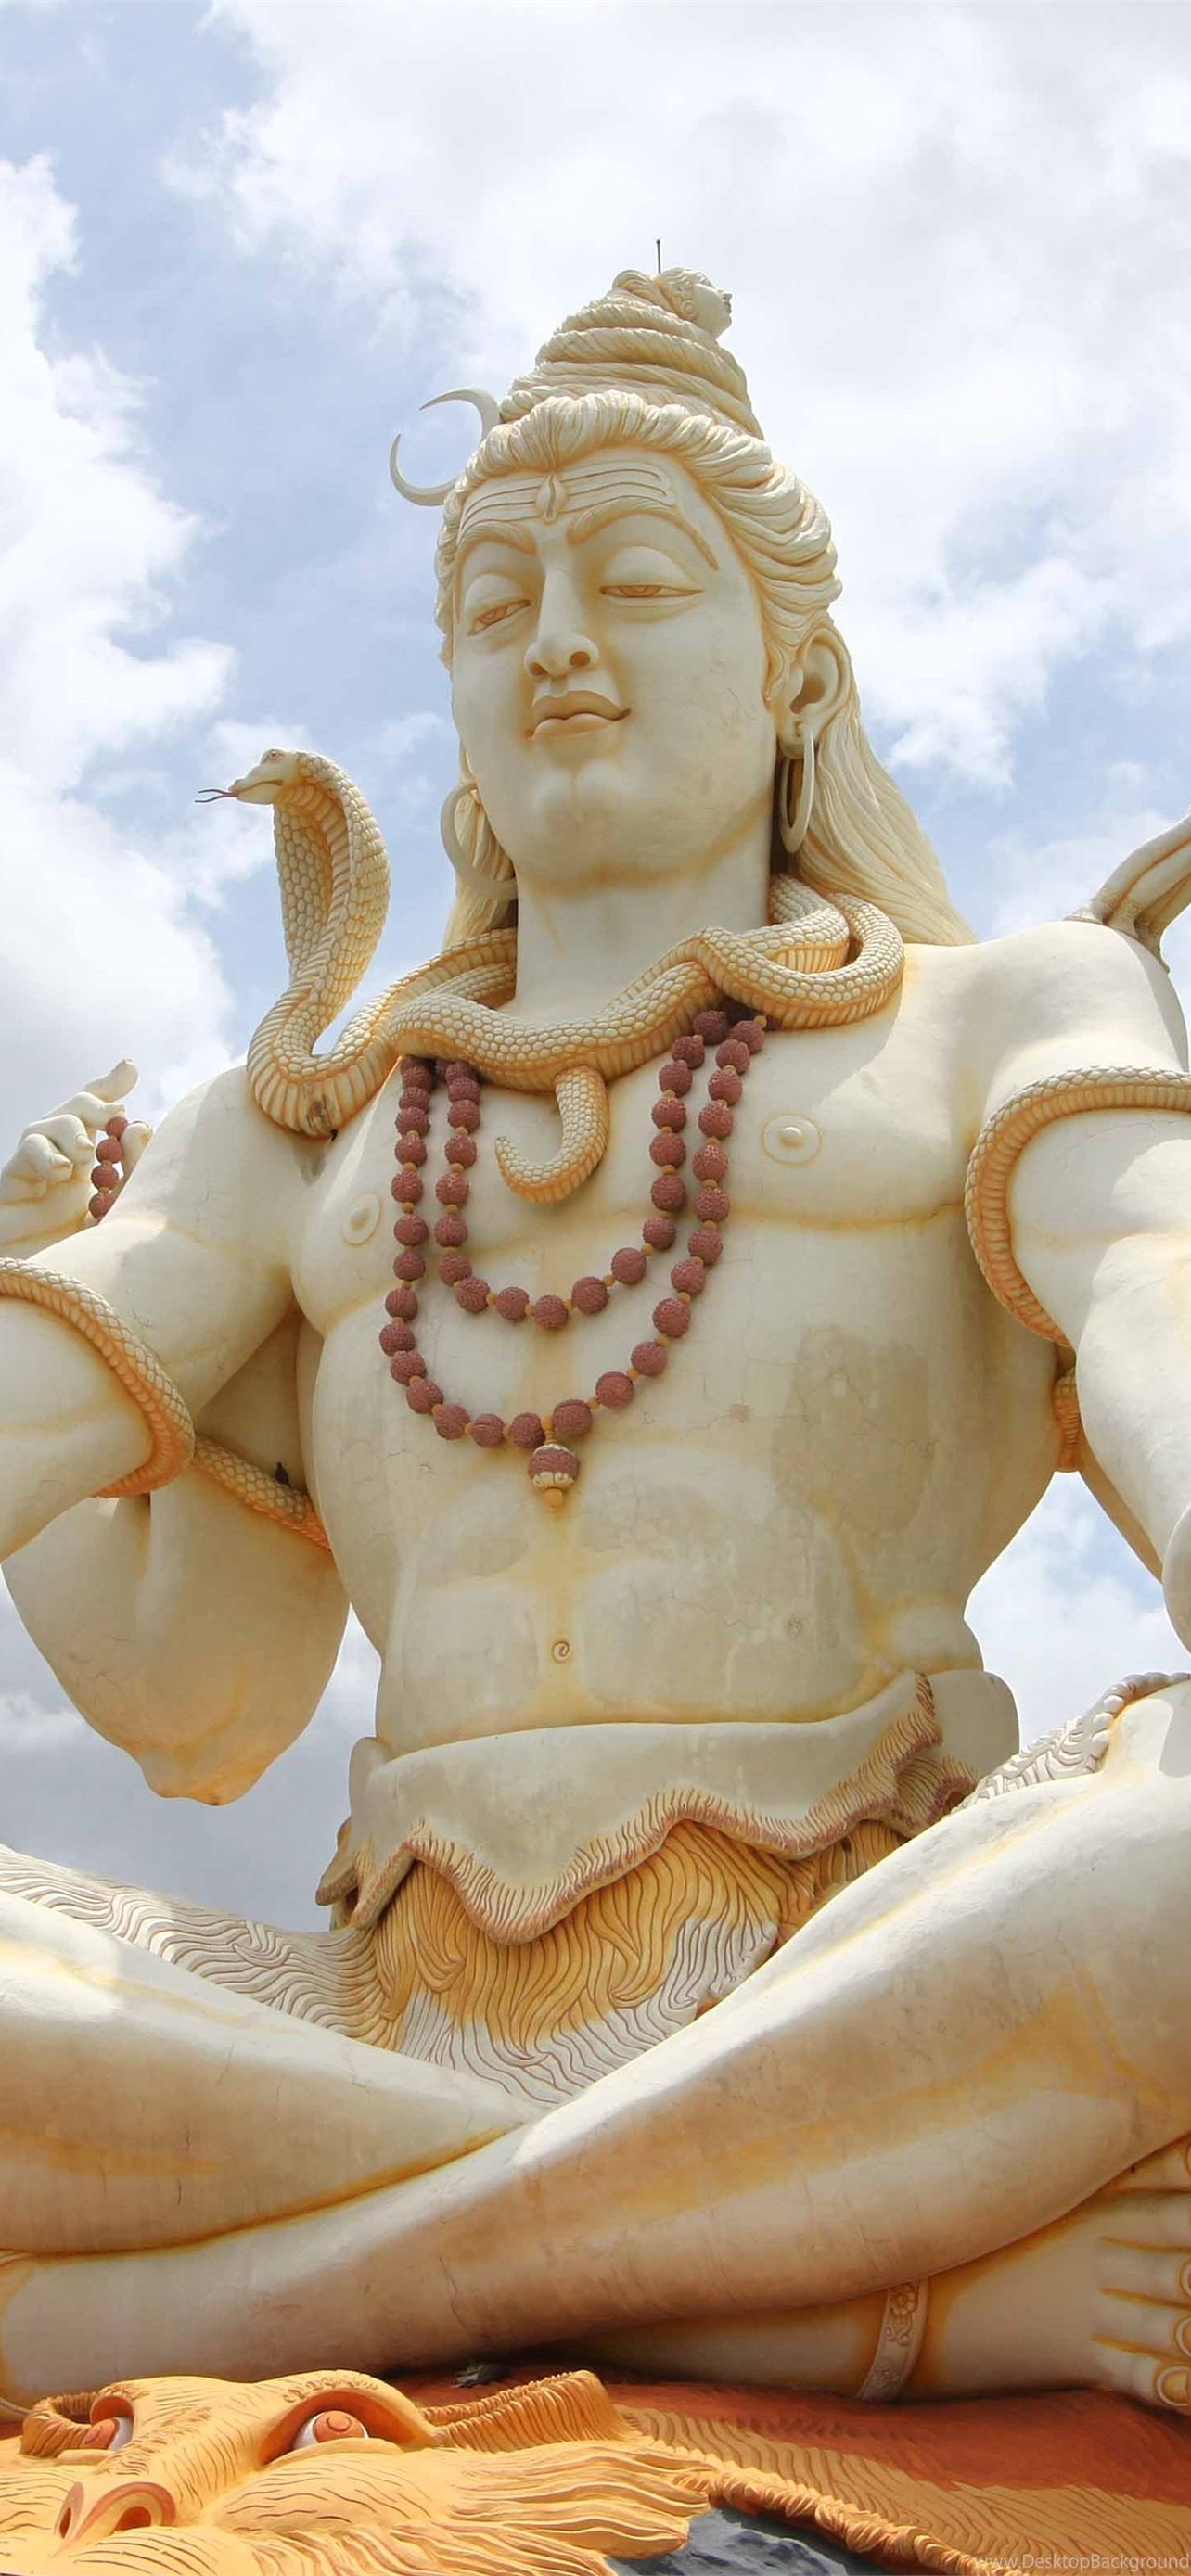 Hindu God Lord Shiva Big Idol Hd Desktop Backgroun... iPhone wallpaper 